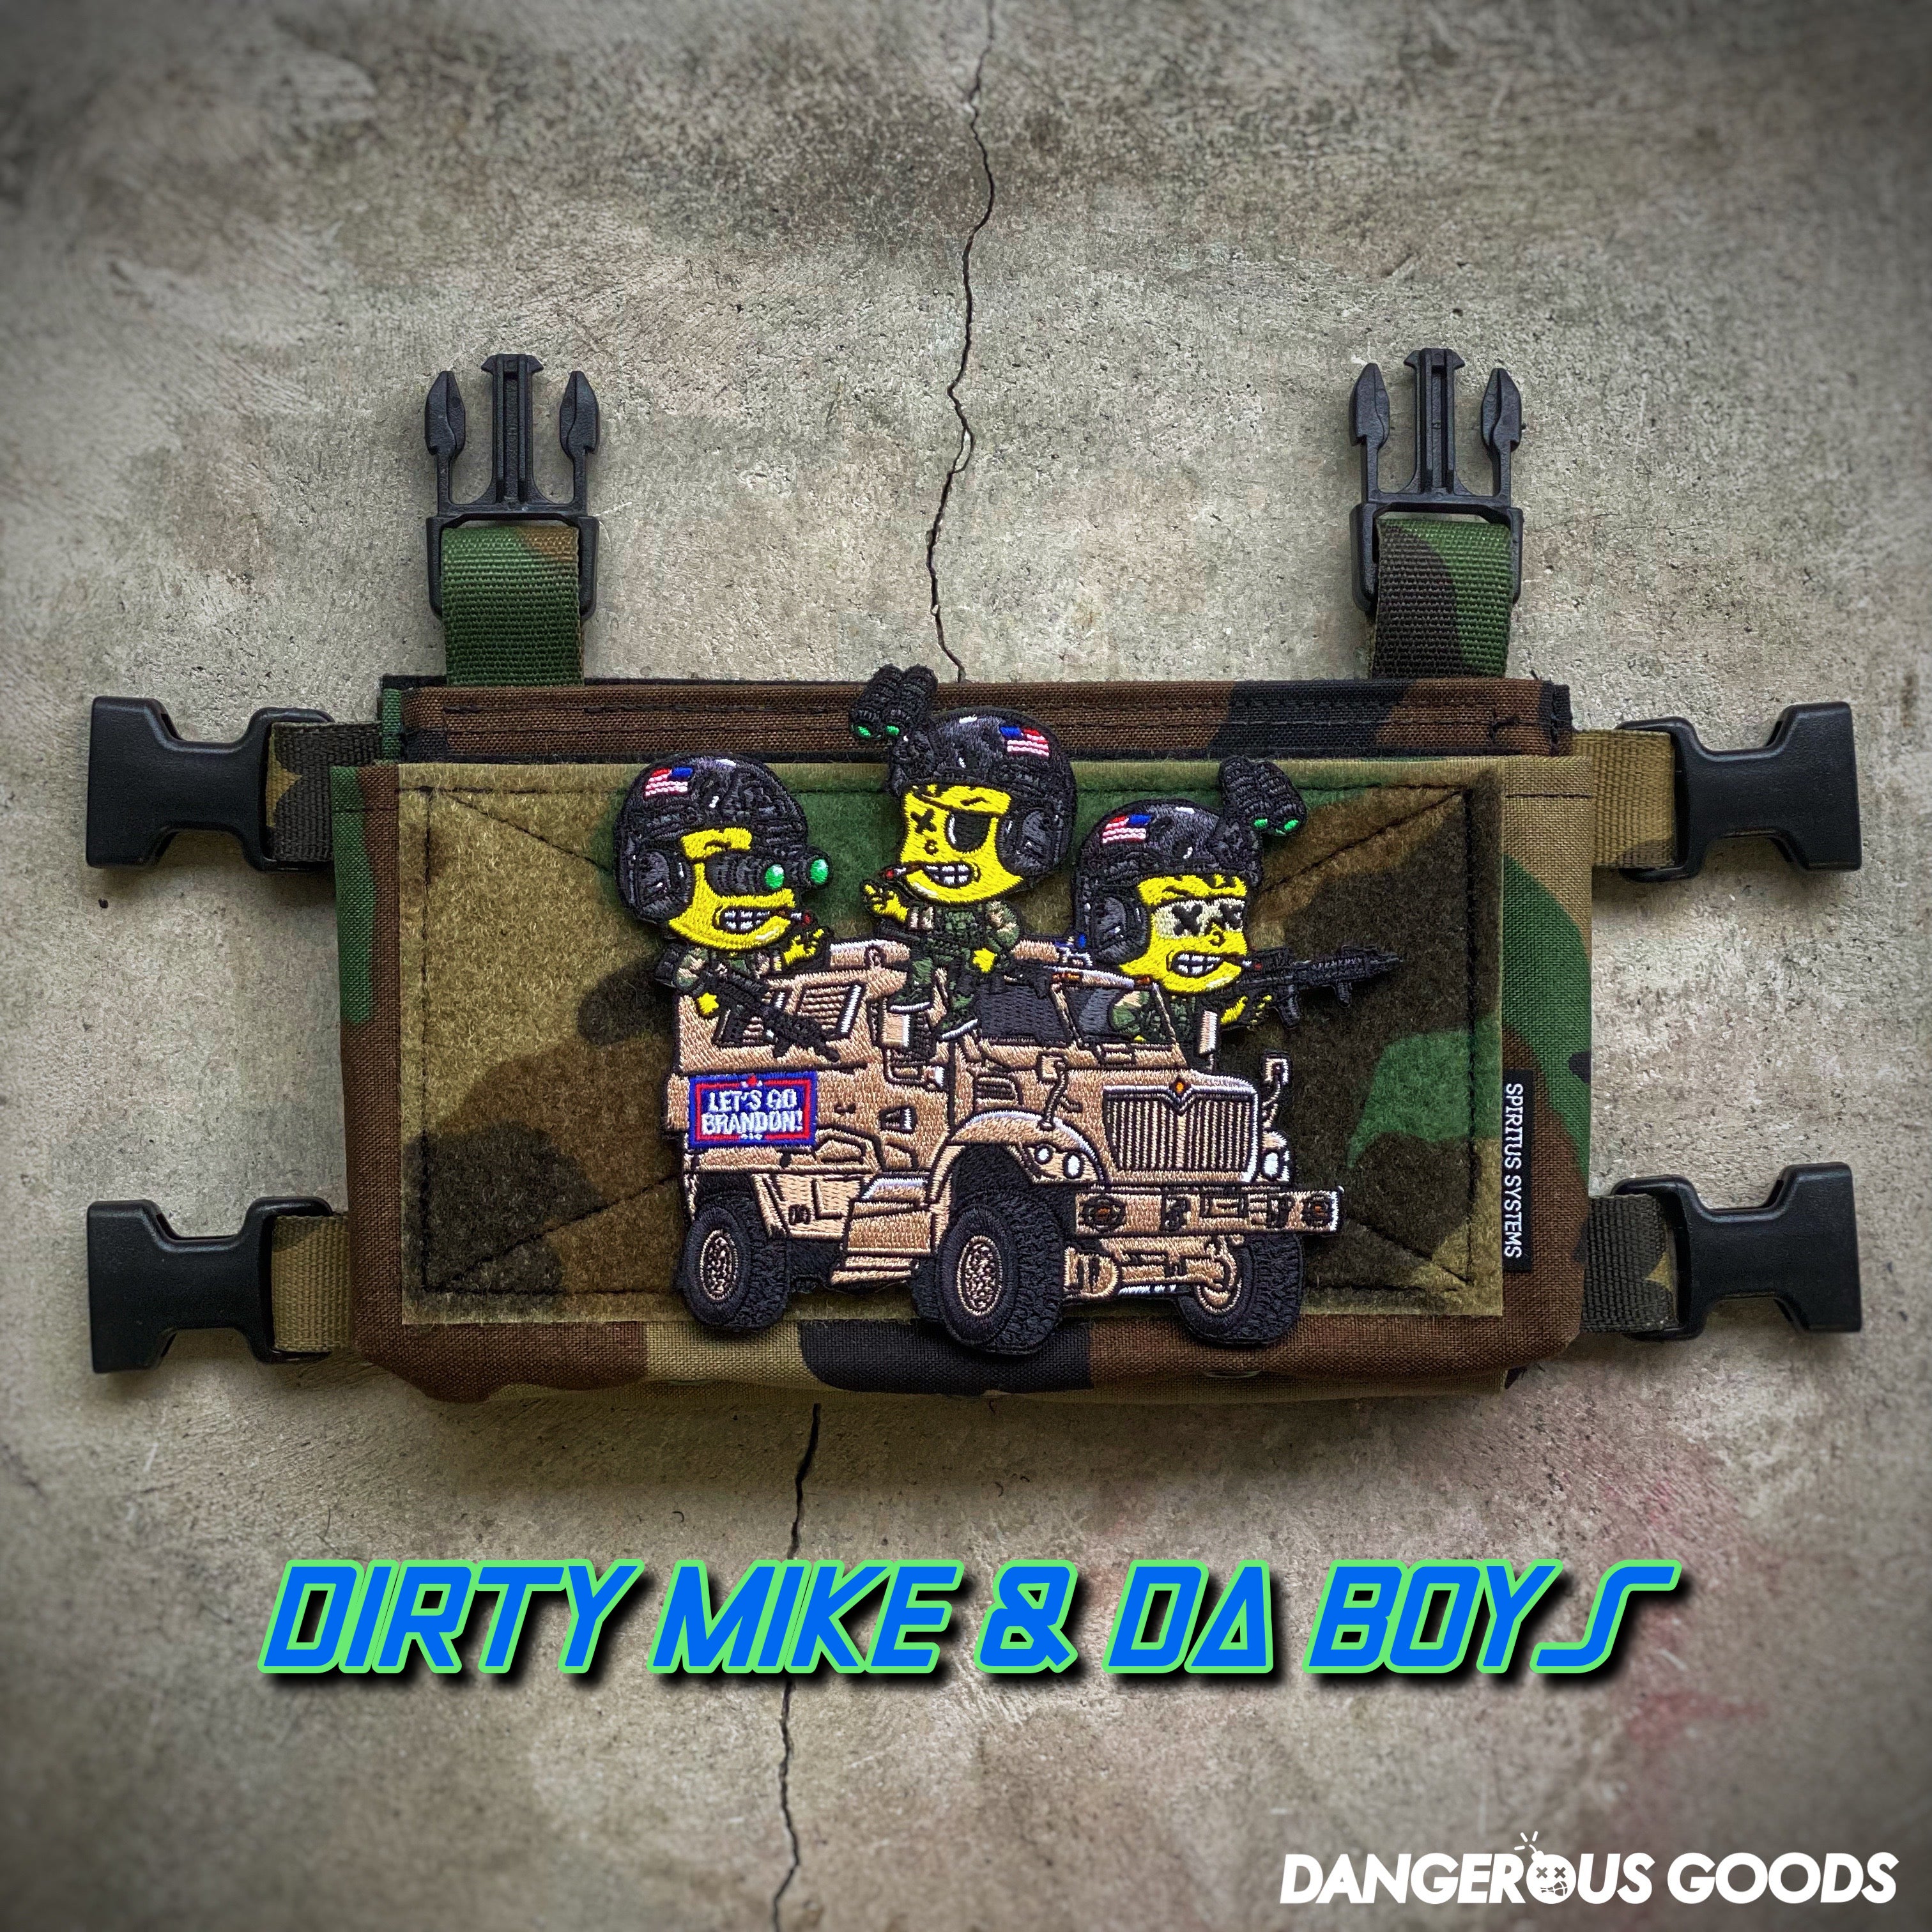 🔥 NEW 🔥 Dangerous Goods®️ Dirty Mike & Da Boys “Let’s Go Brandon” MRAP Patch - FDE Tan